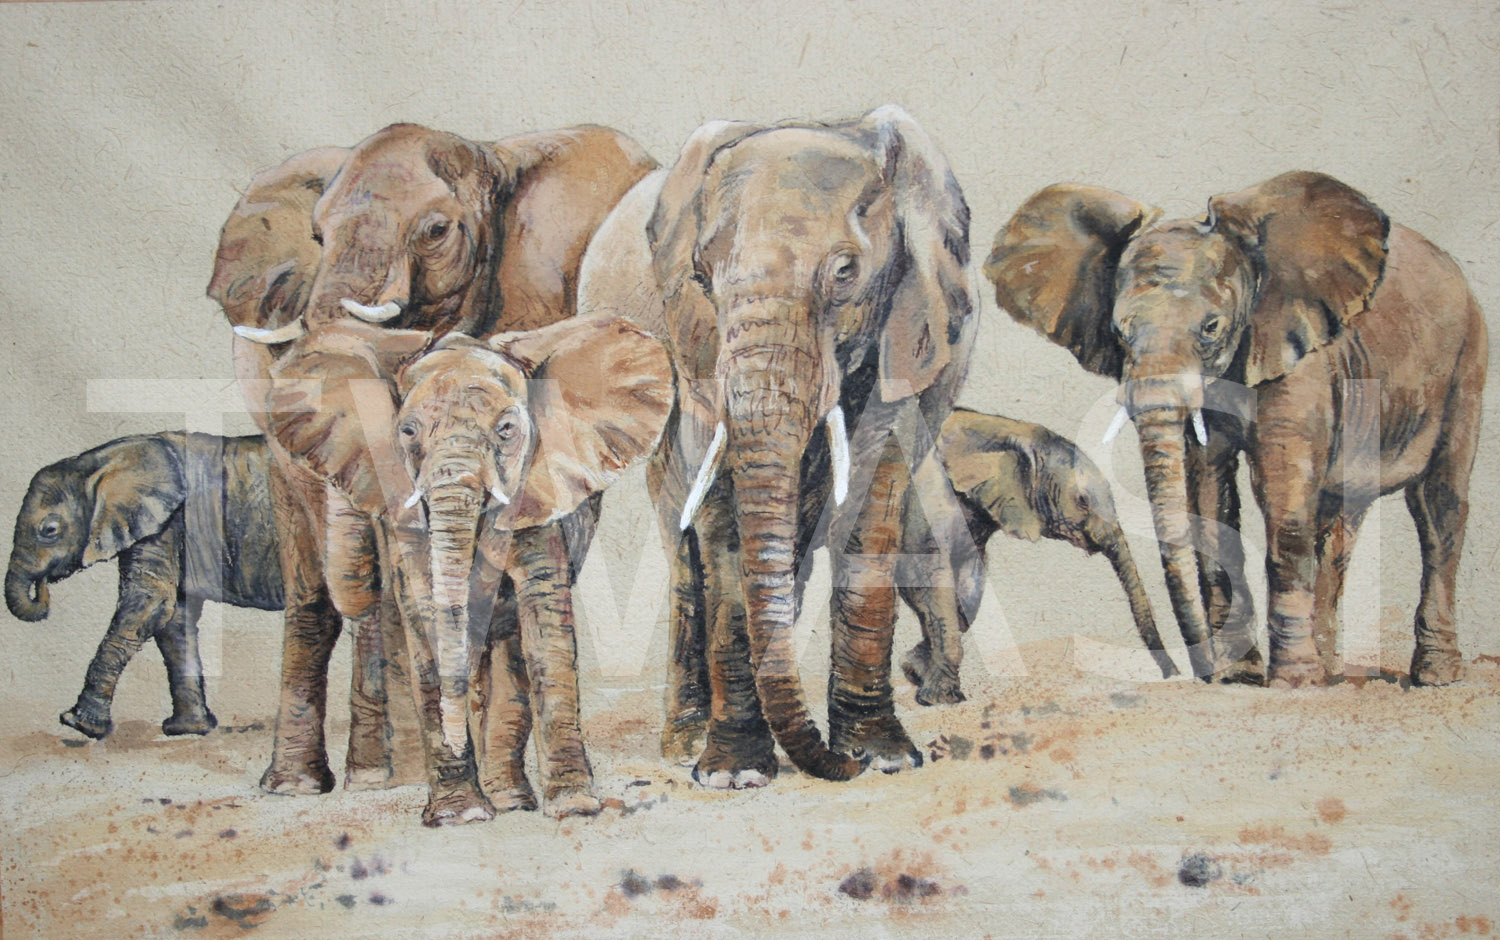 'Elders' Wisdom by Carol Barrett Watercolour and Coffee on Elephant dung paper 51 x 37 cms L320